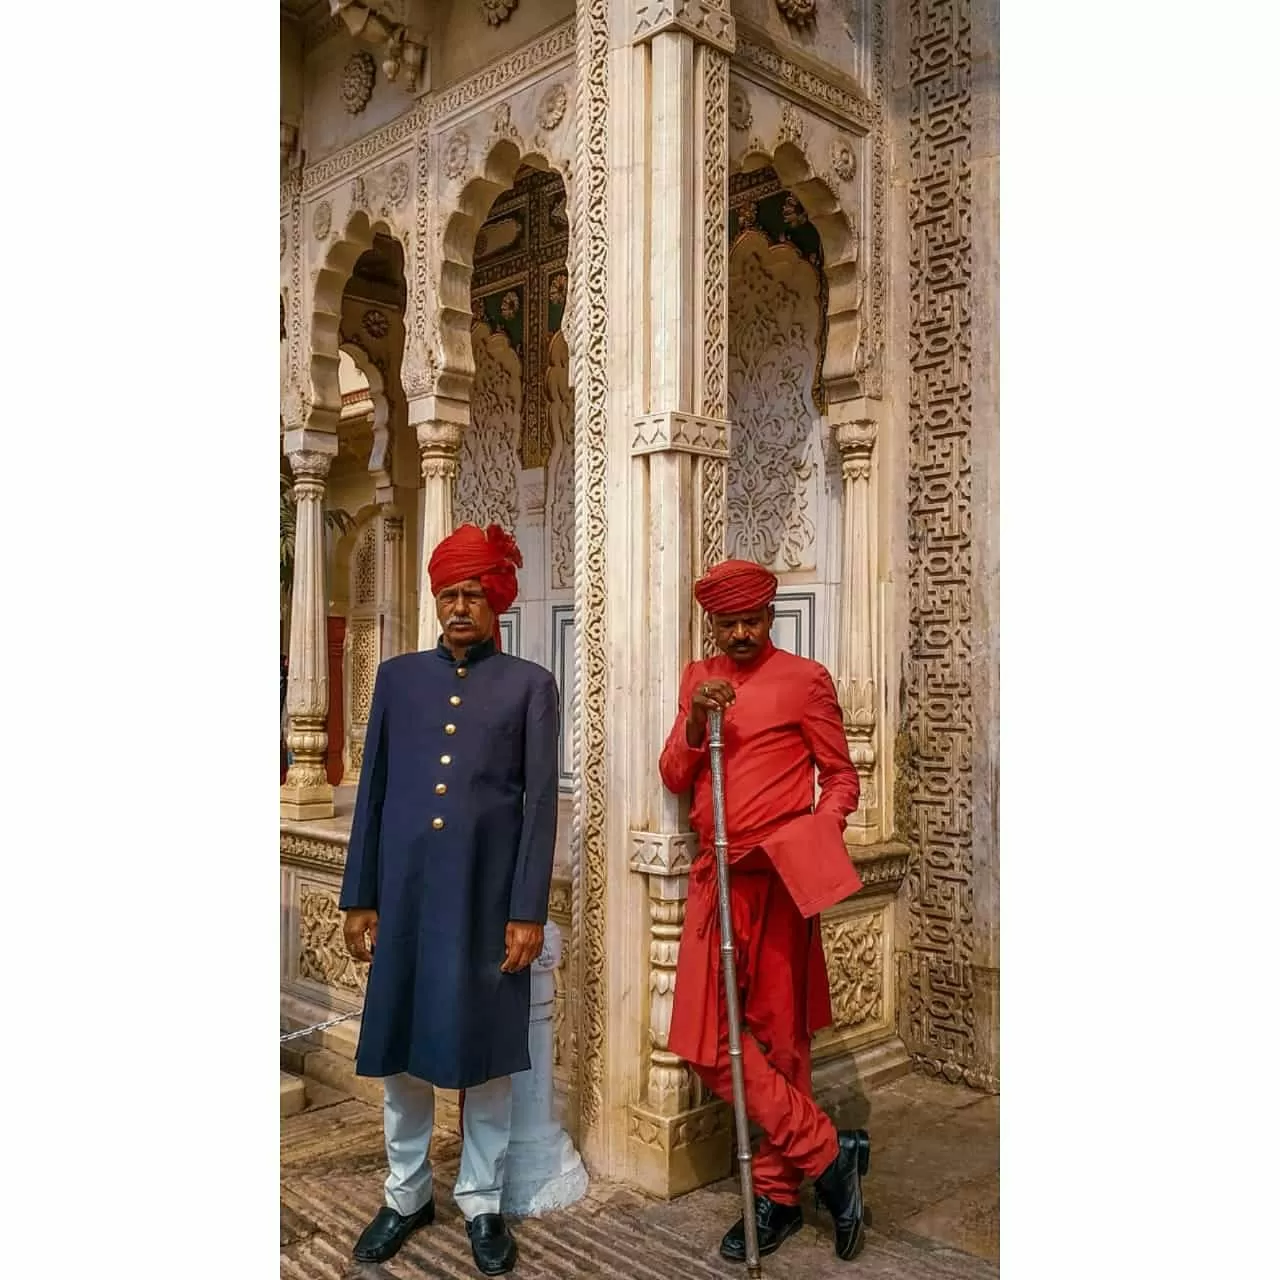 Photo of Jaipur By chinmay sharma